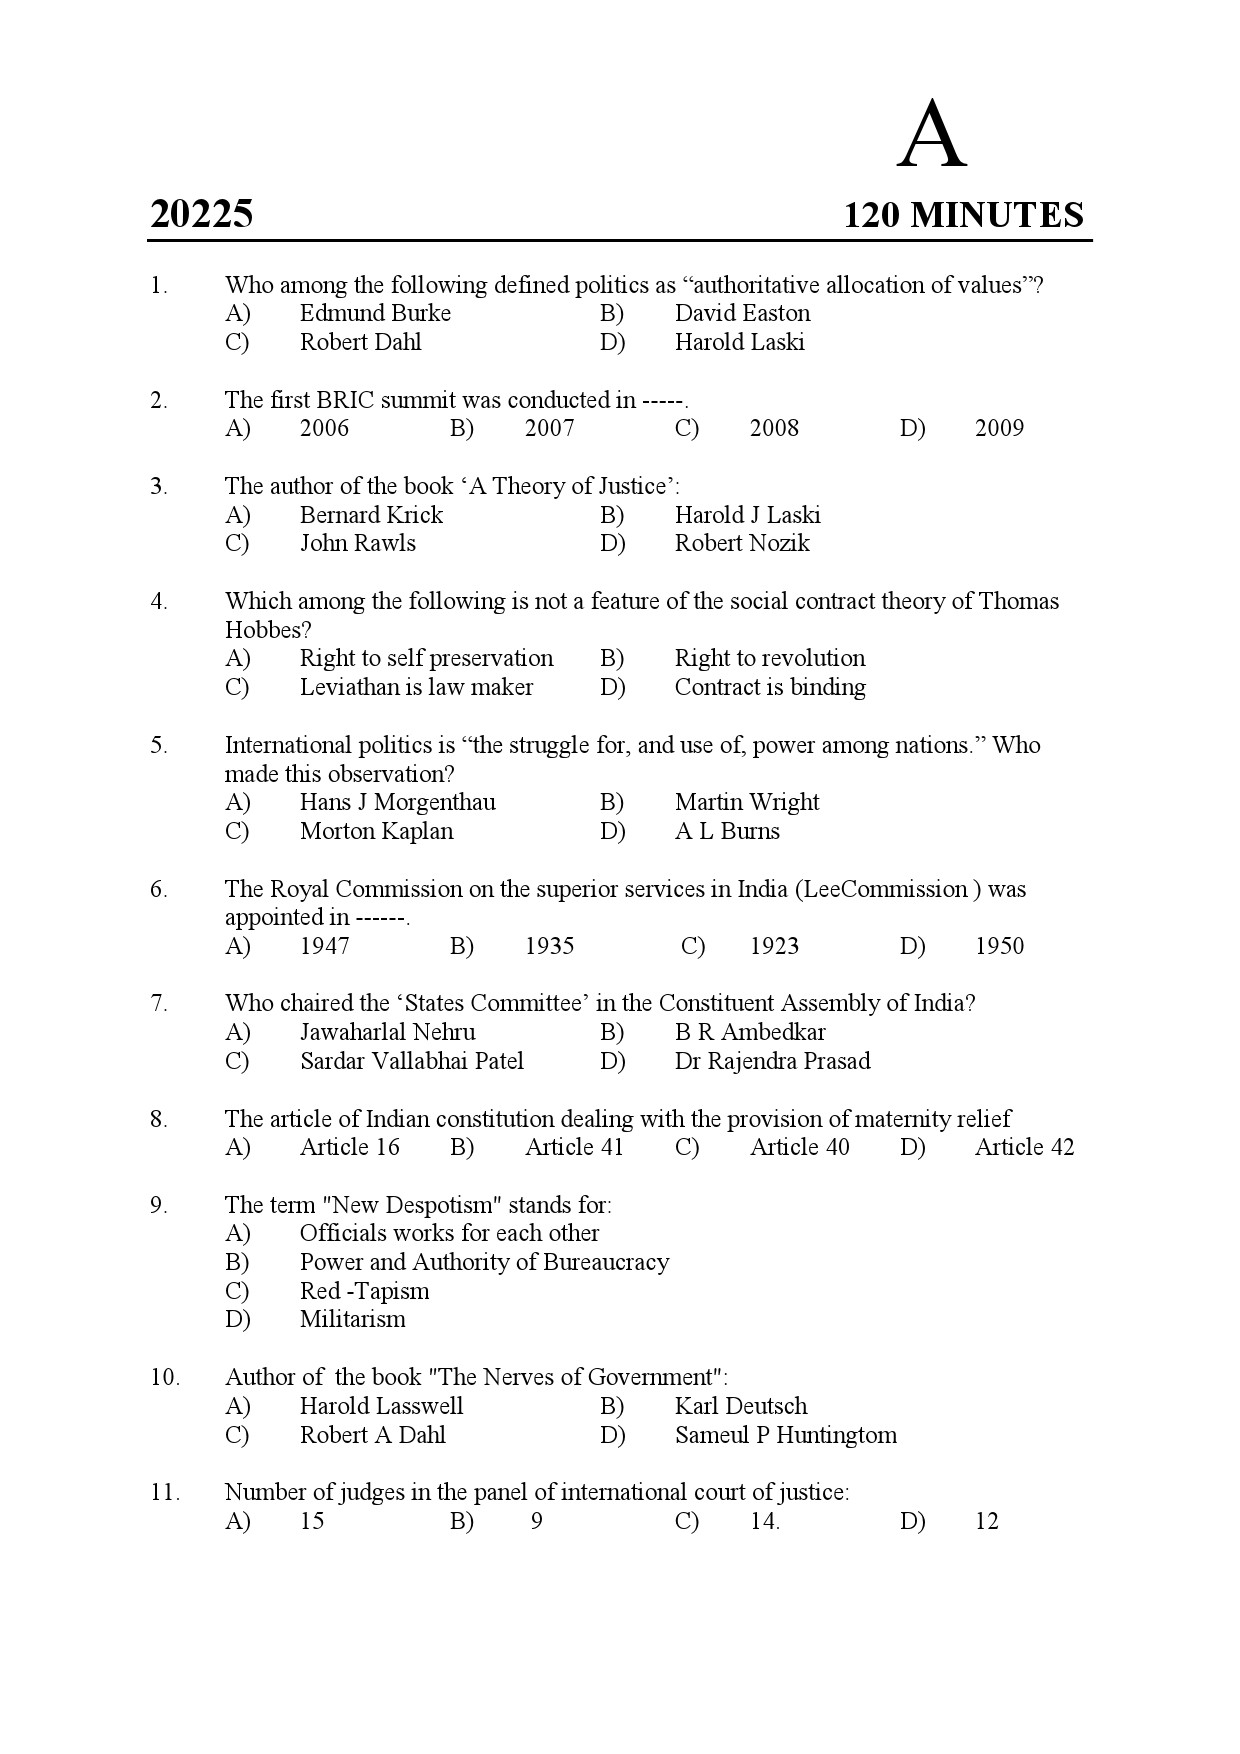 Kerala SET Political Science Exam Question Paper February 2020 1